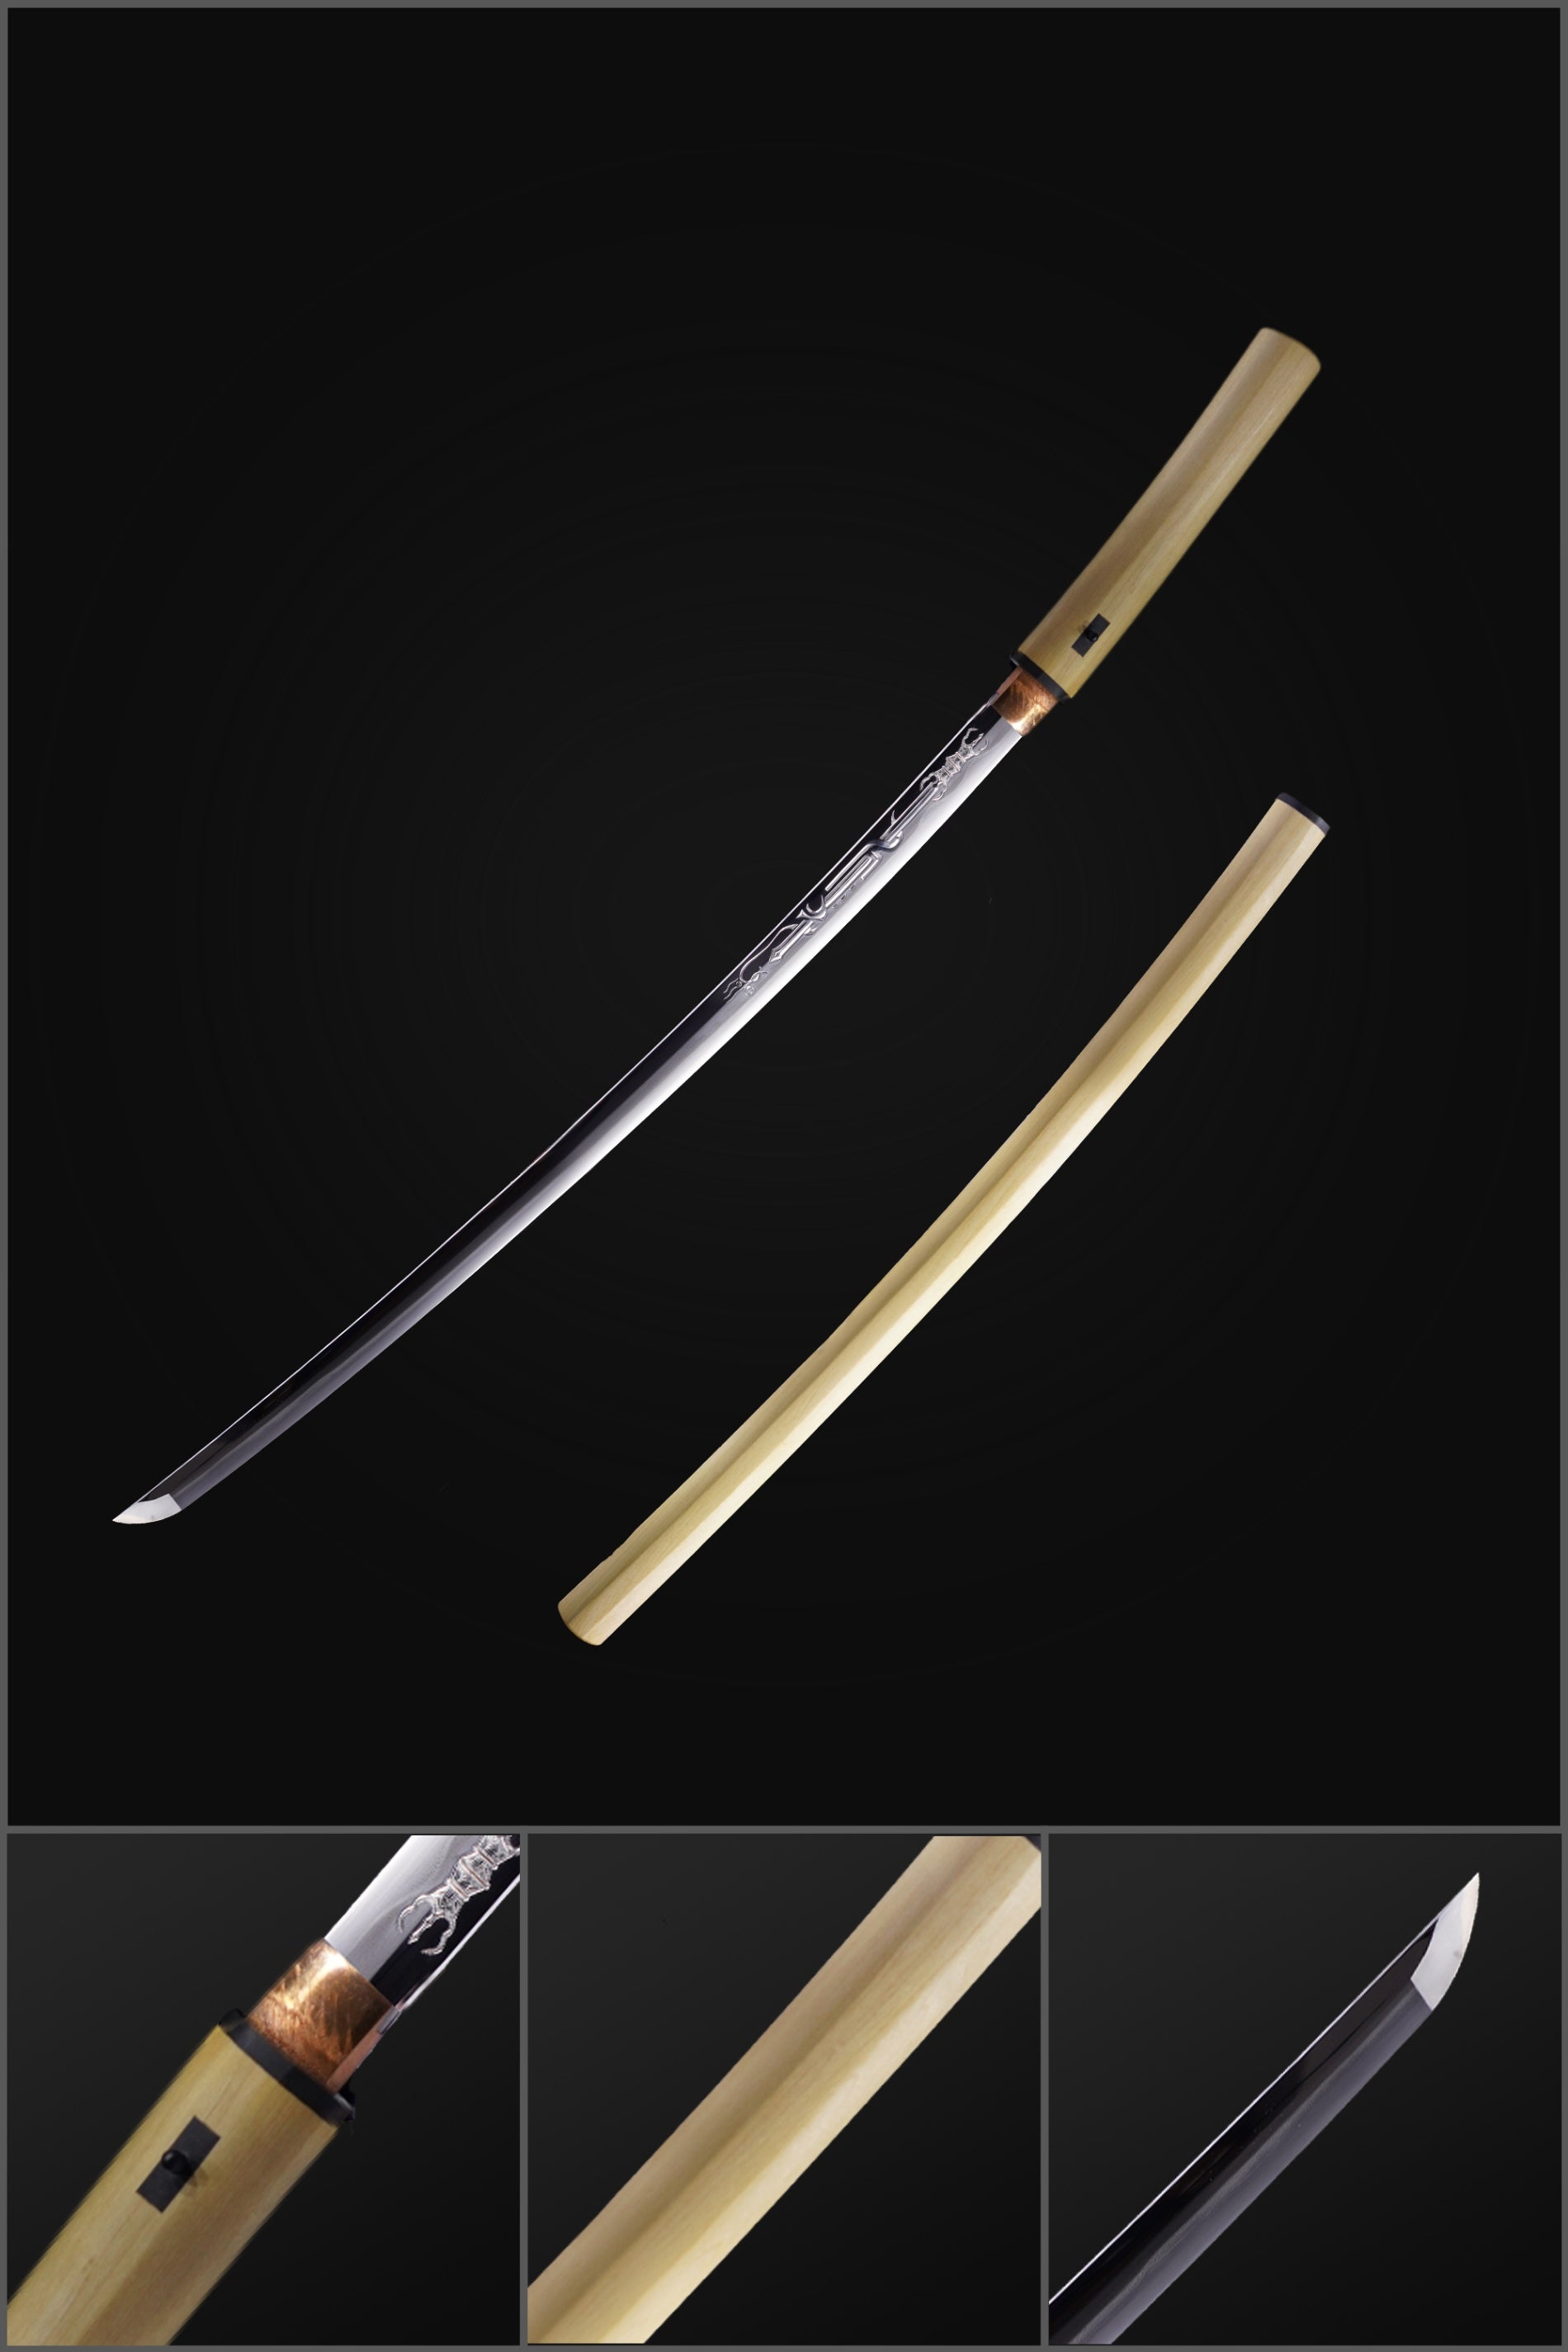 Buy Muramasa Sword Online In India -  India